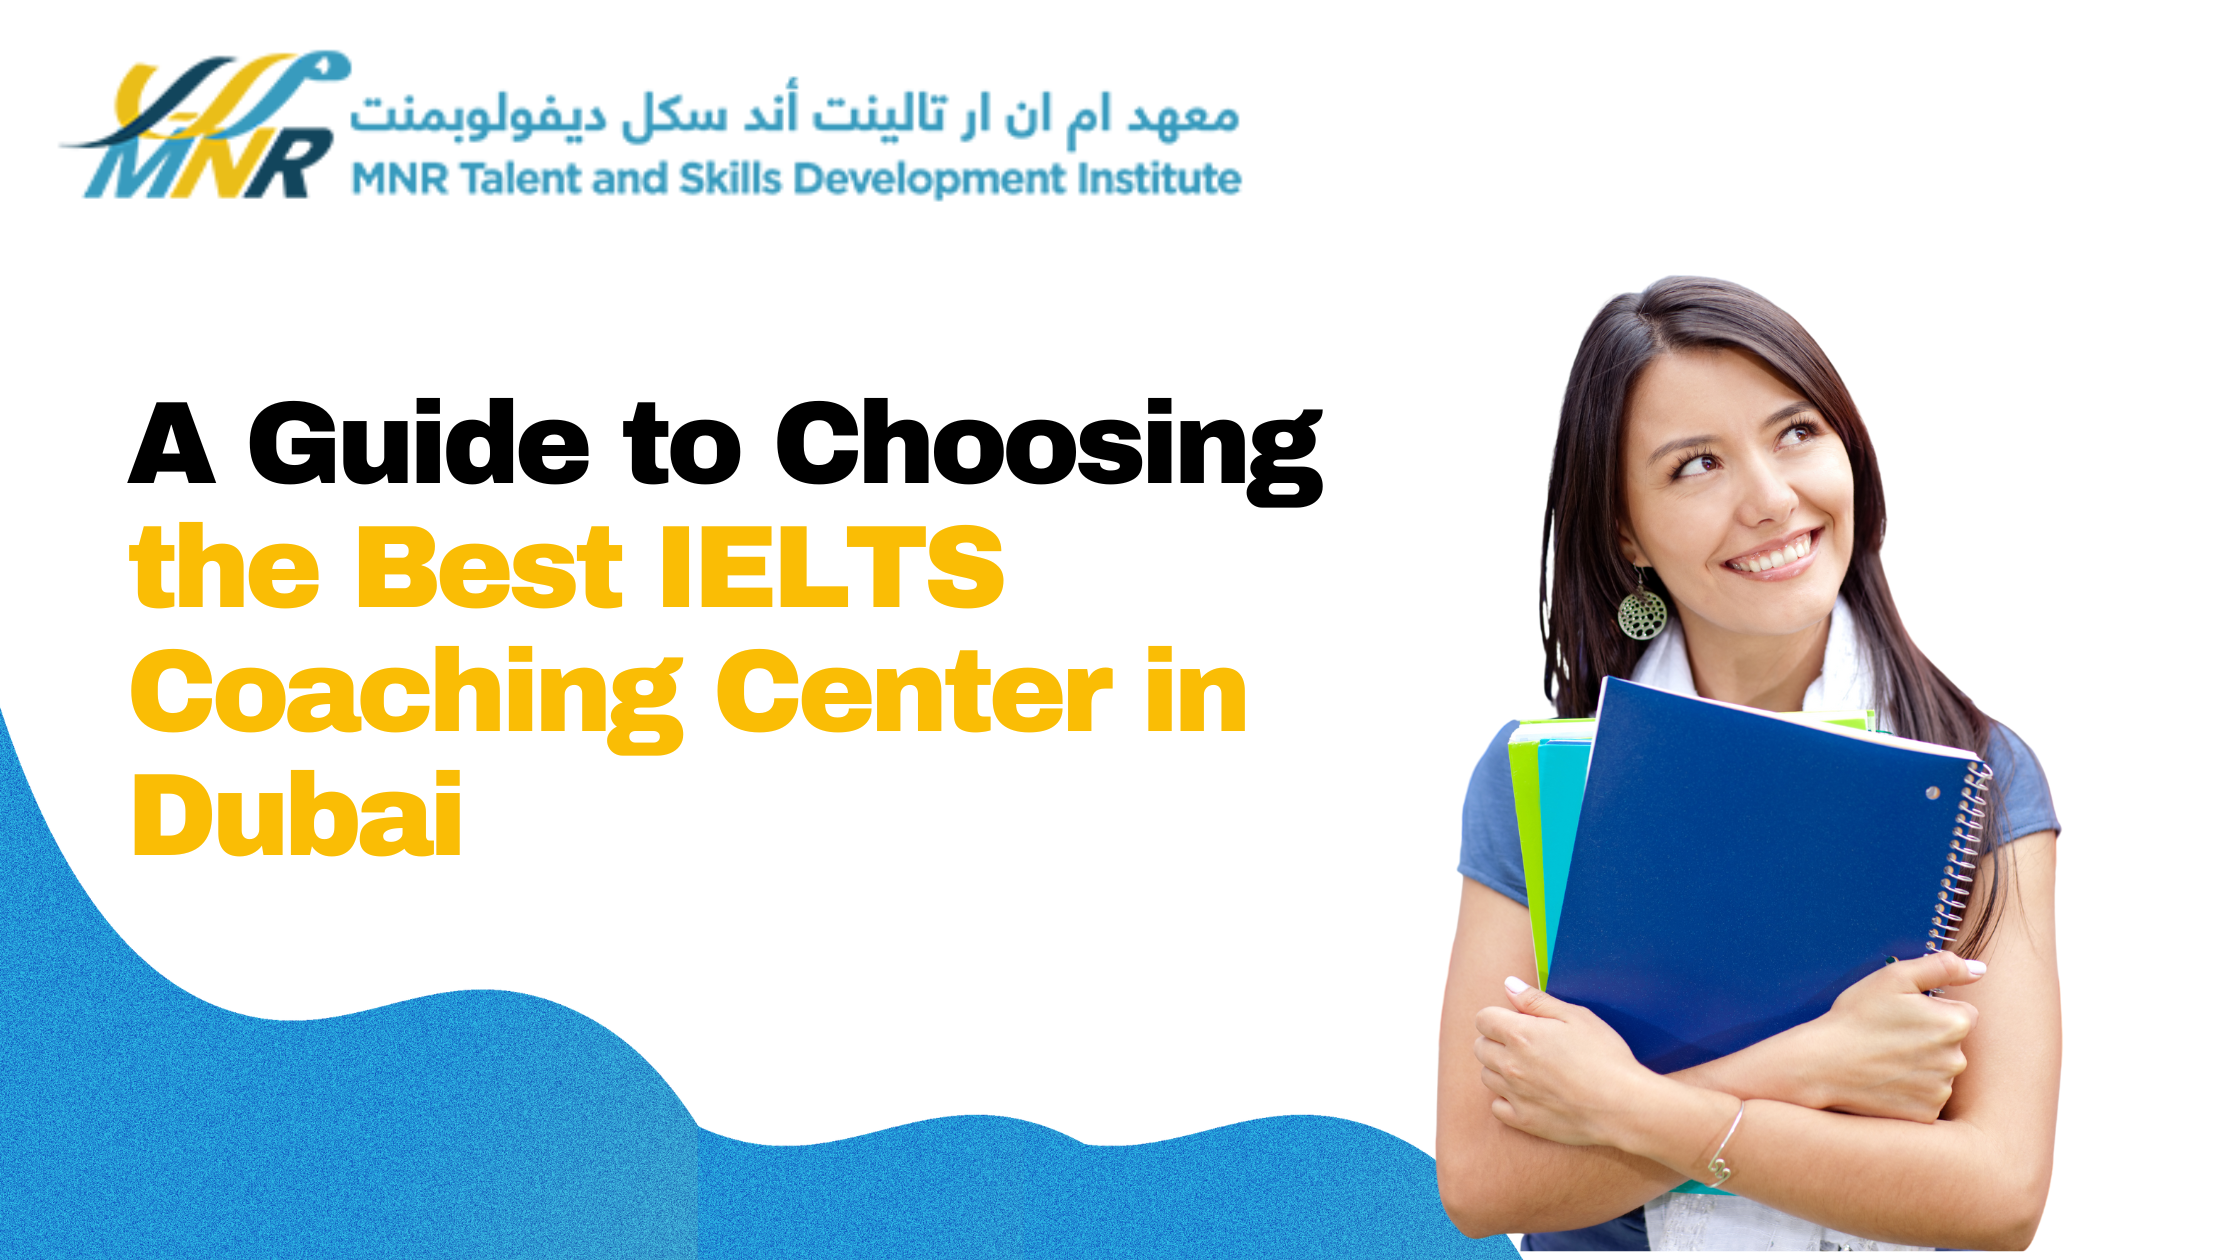 A Guide to Choosing the Best IELTS Coaching Center in Dubai